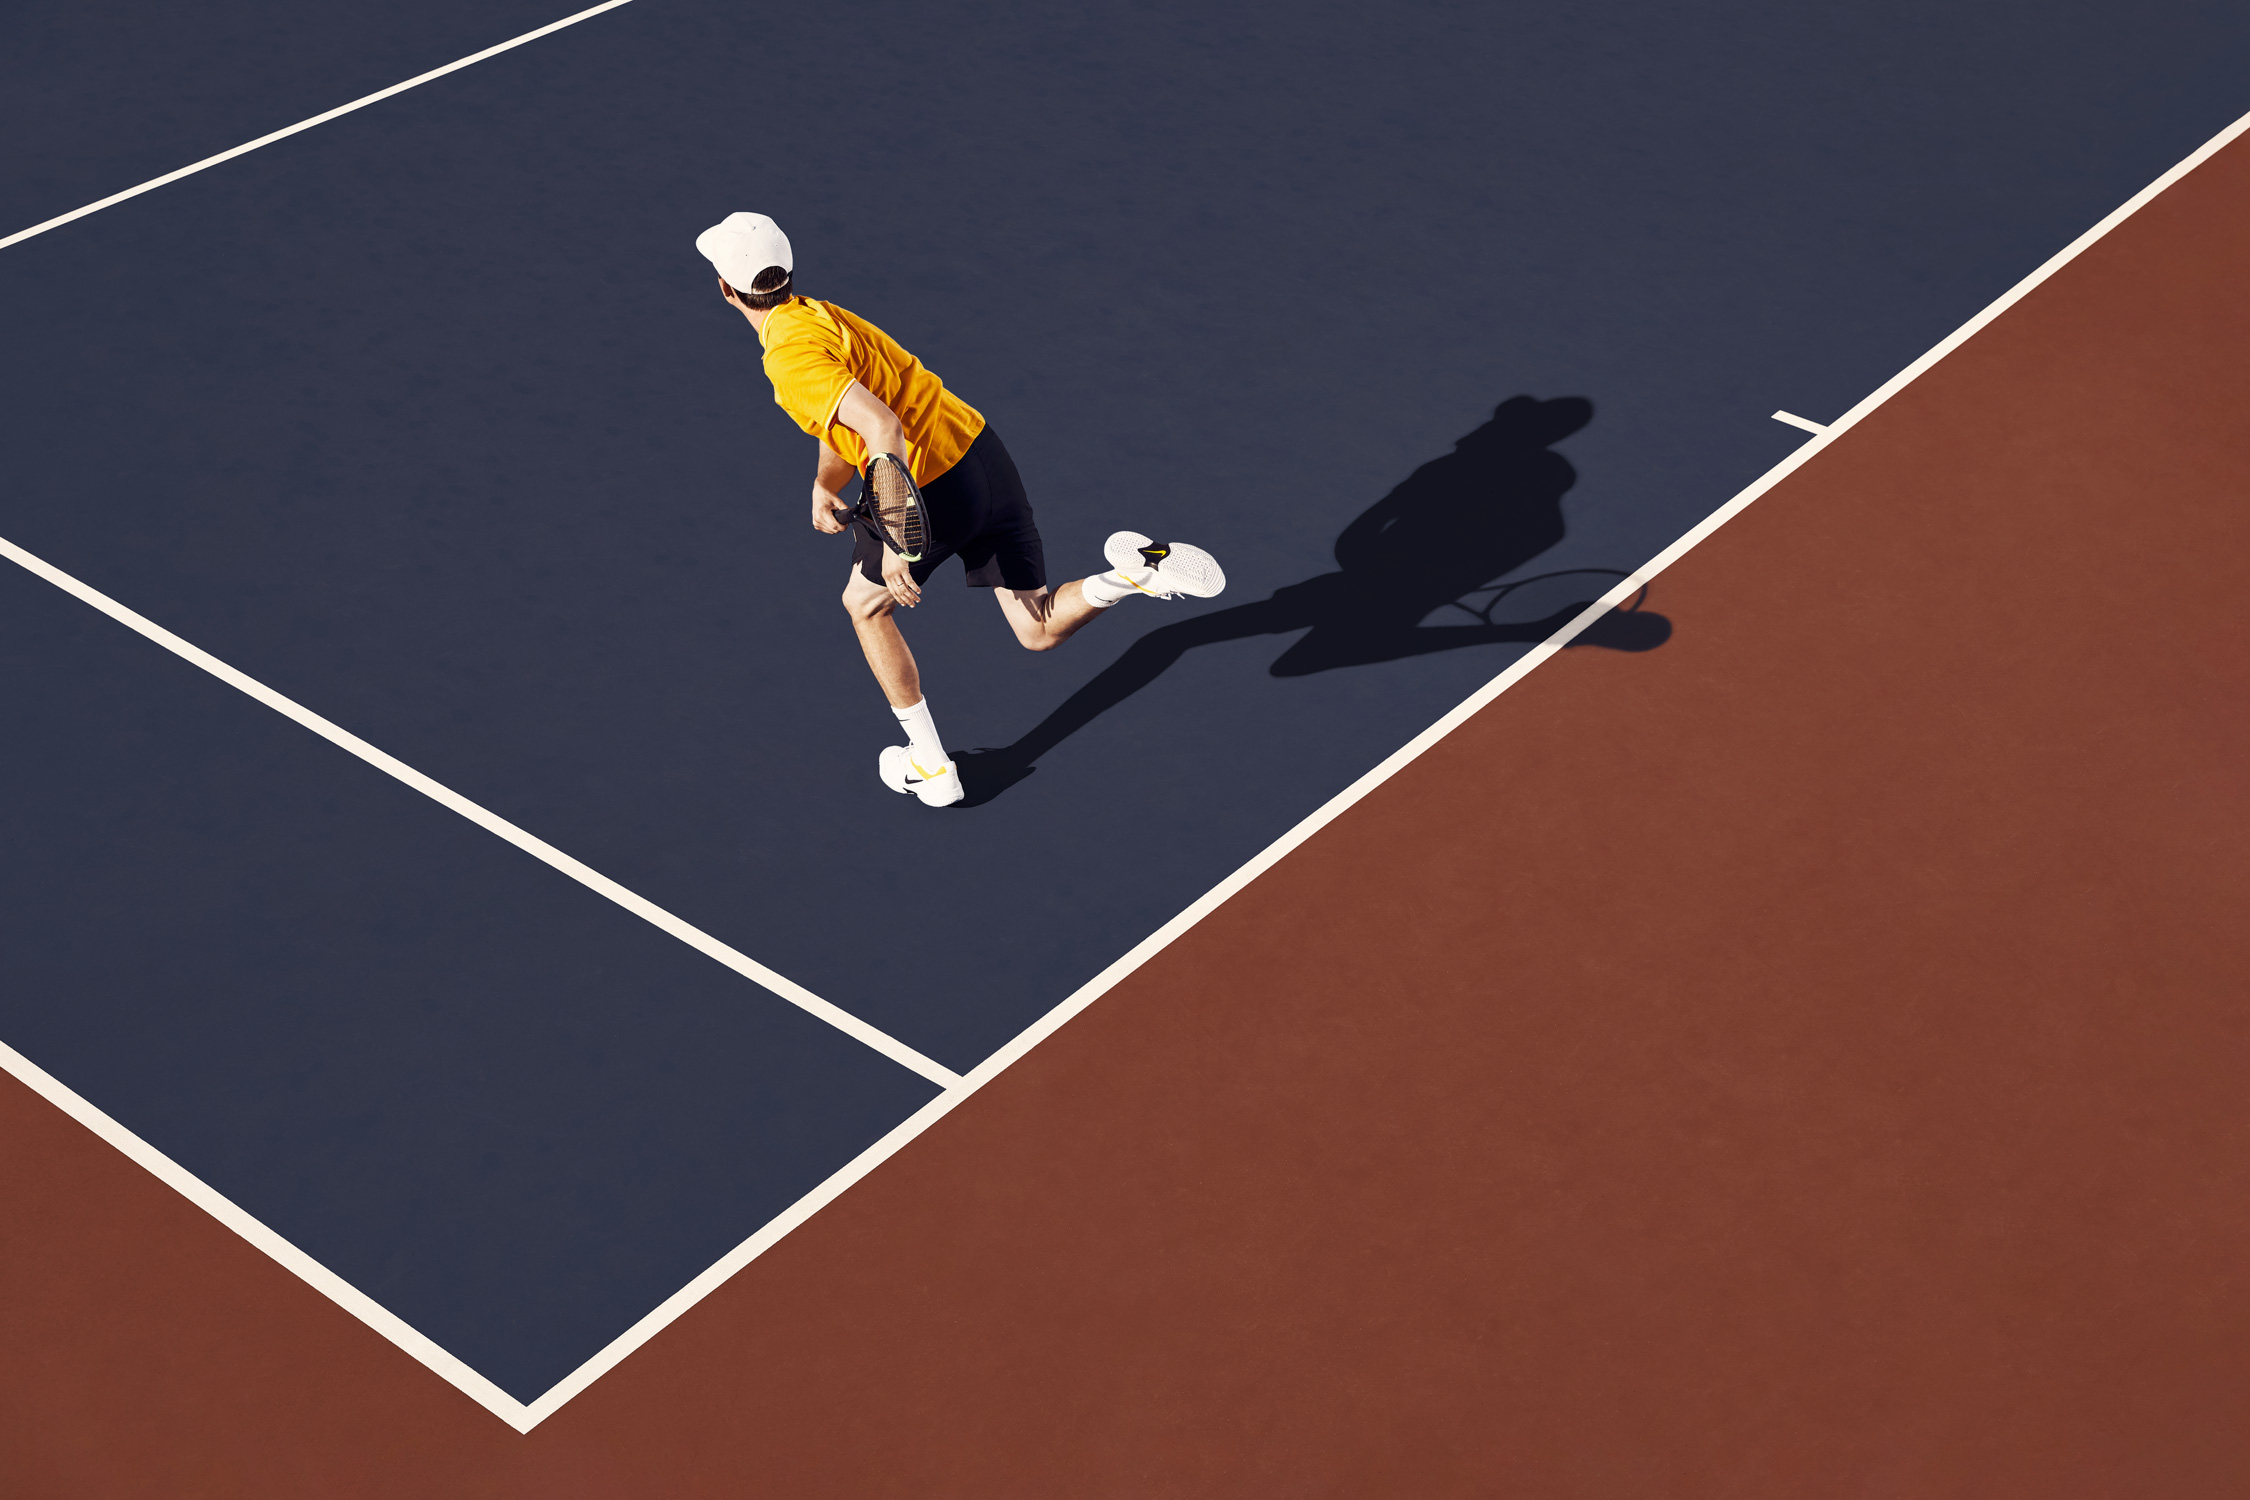 Nike Tennis  - Stephen Denton Photography -  Los Angeles, California based  Commercial Photographer